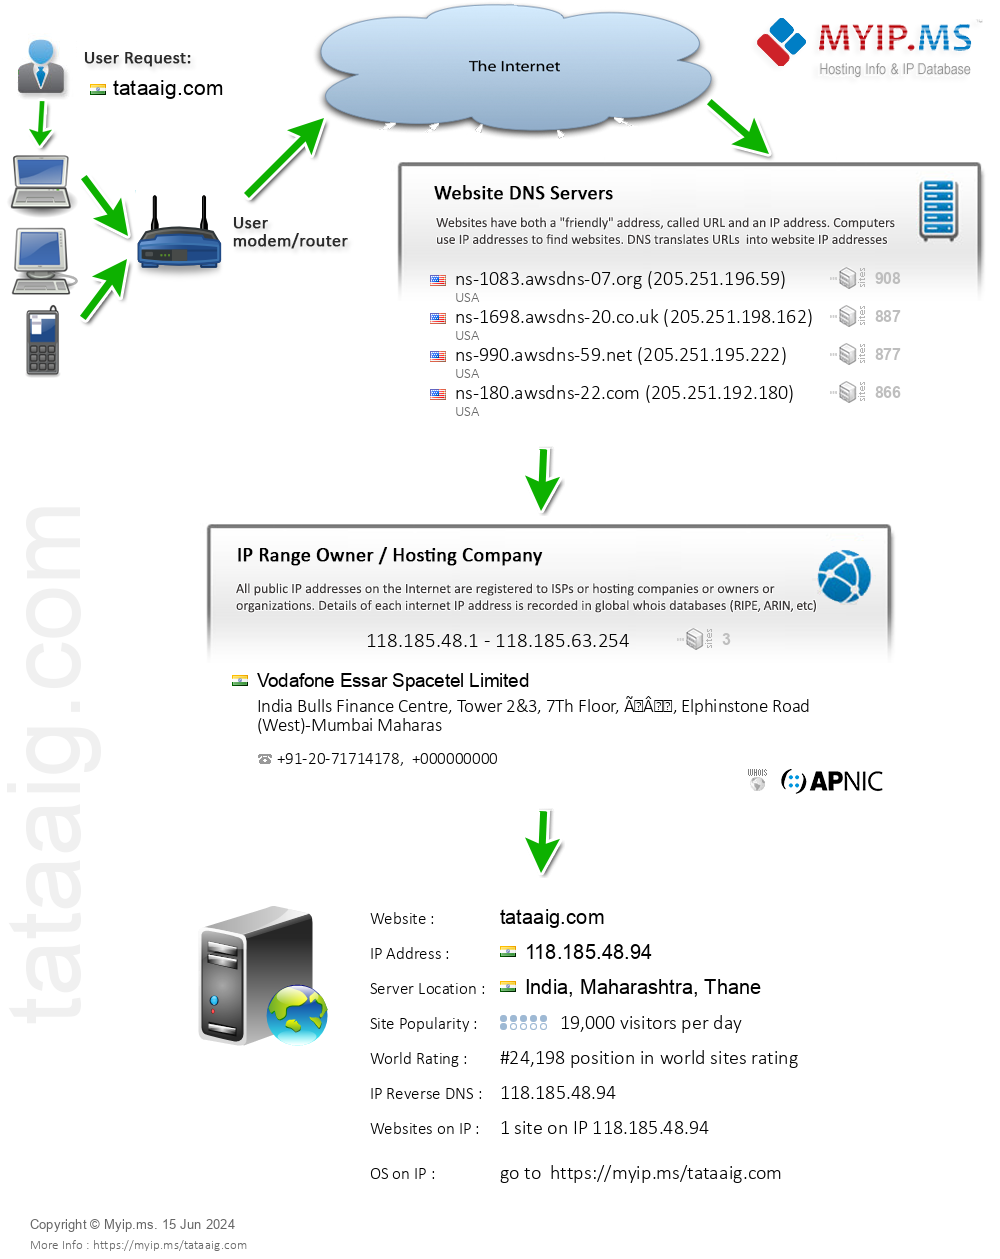 Tataaig.com - Website Hosting Visual IP Diagram